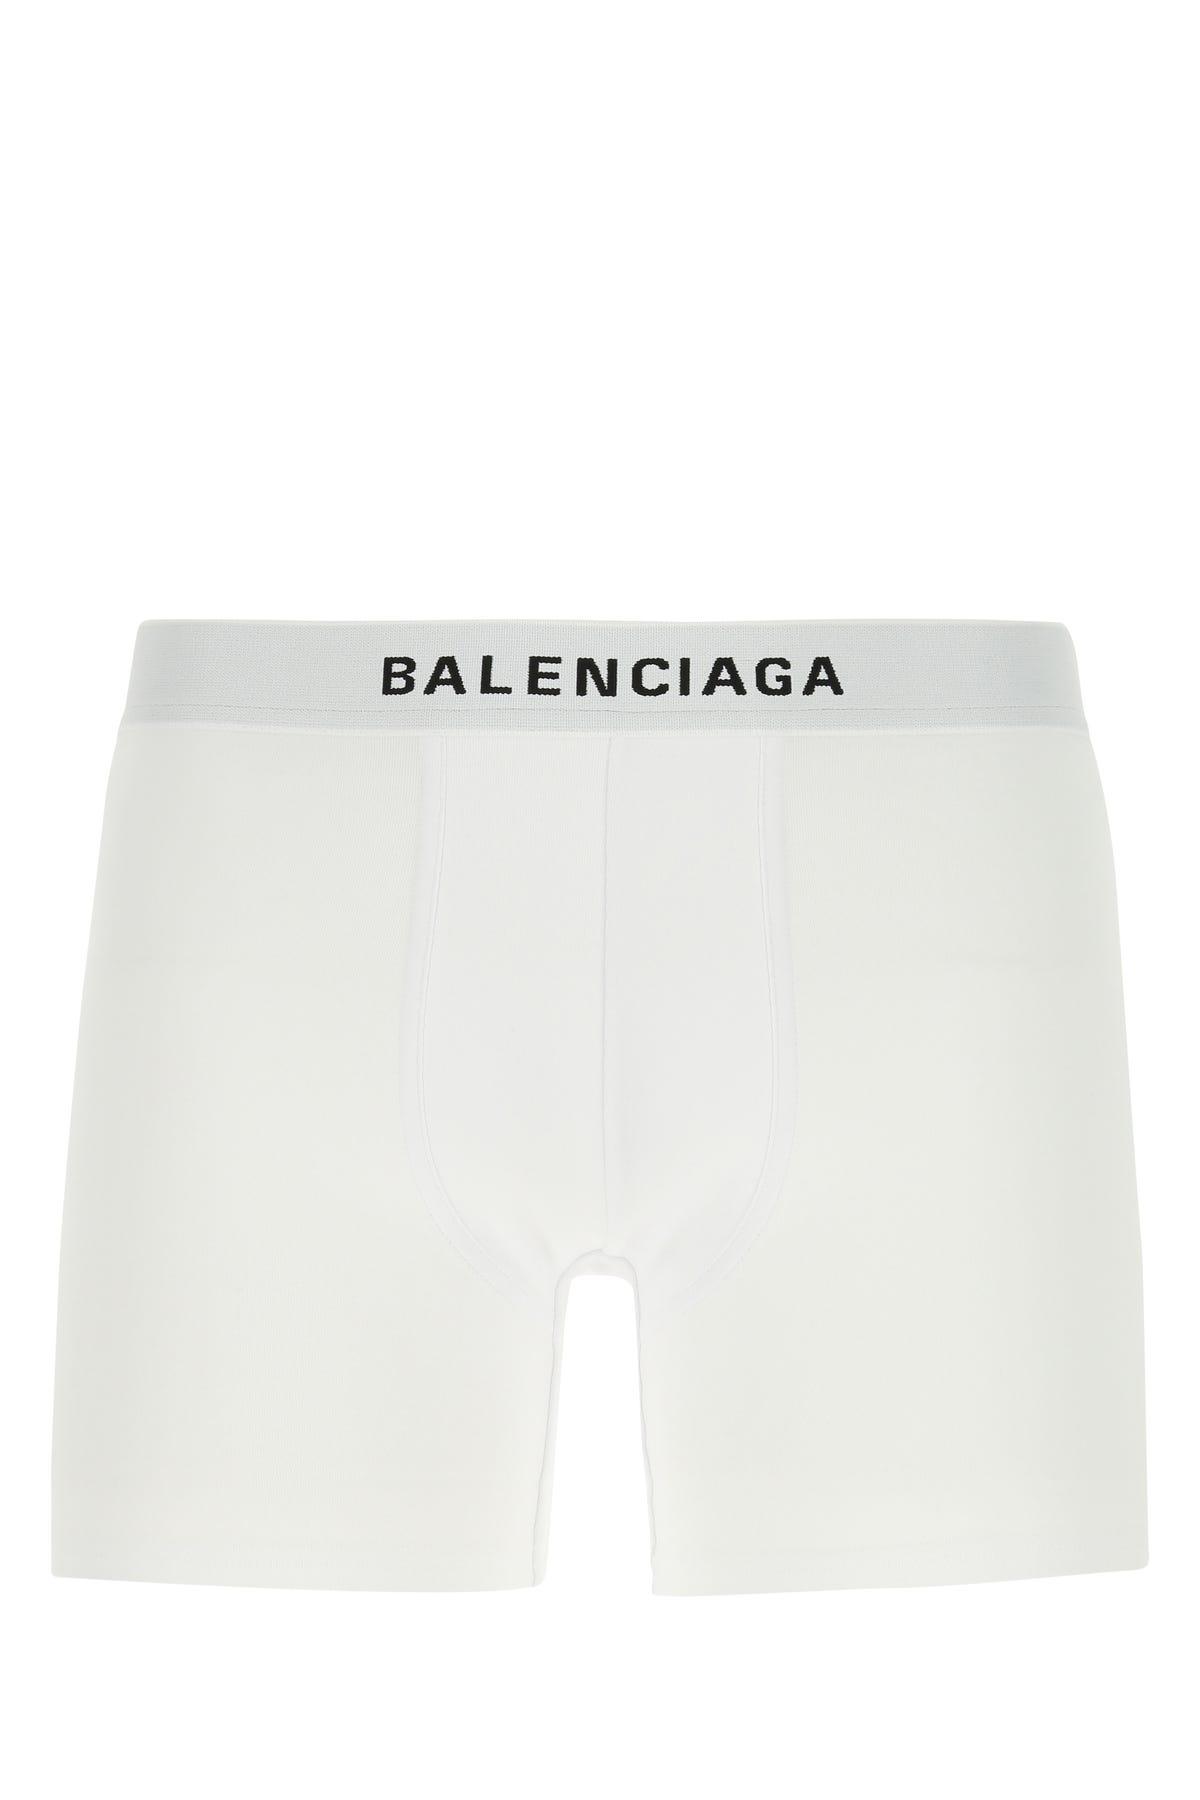 Balenciaga Stretch Cotton Boxer in White for Men | Lyst